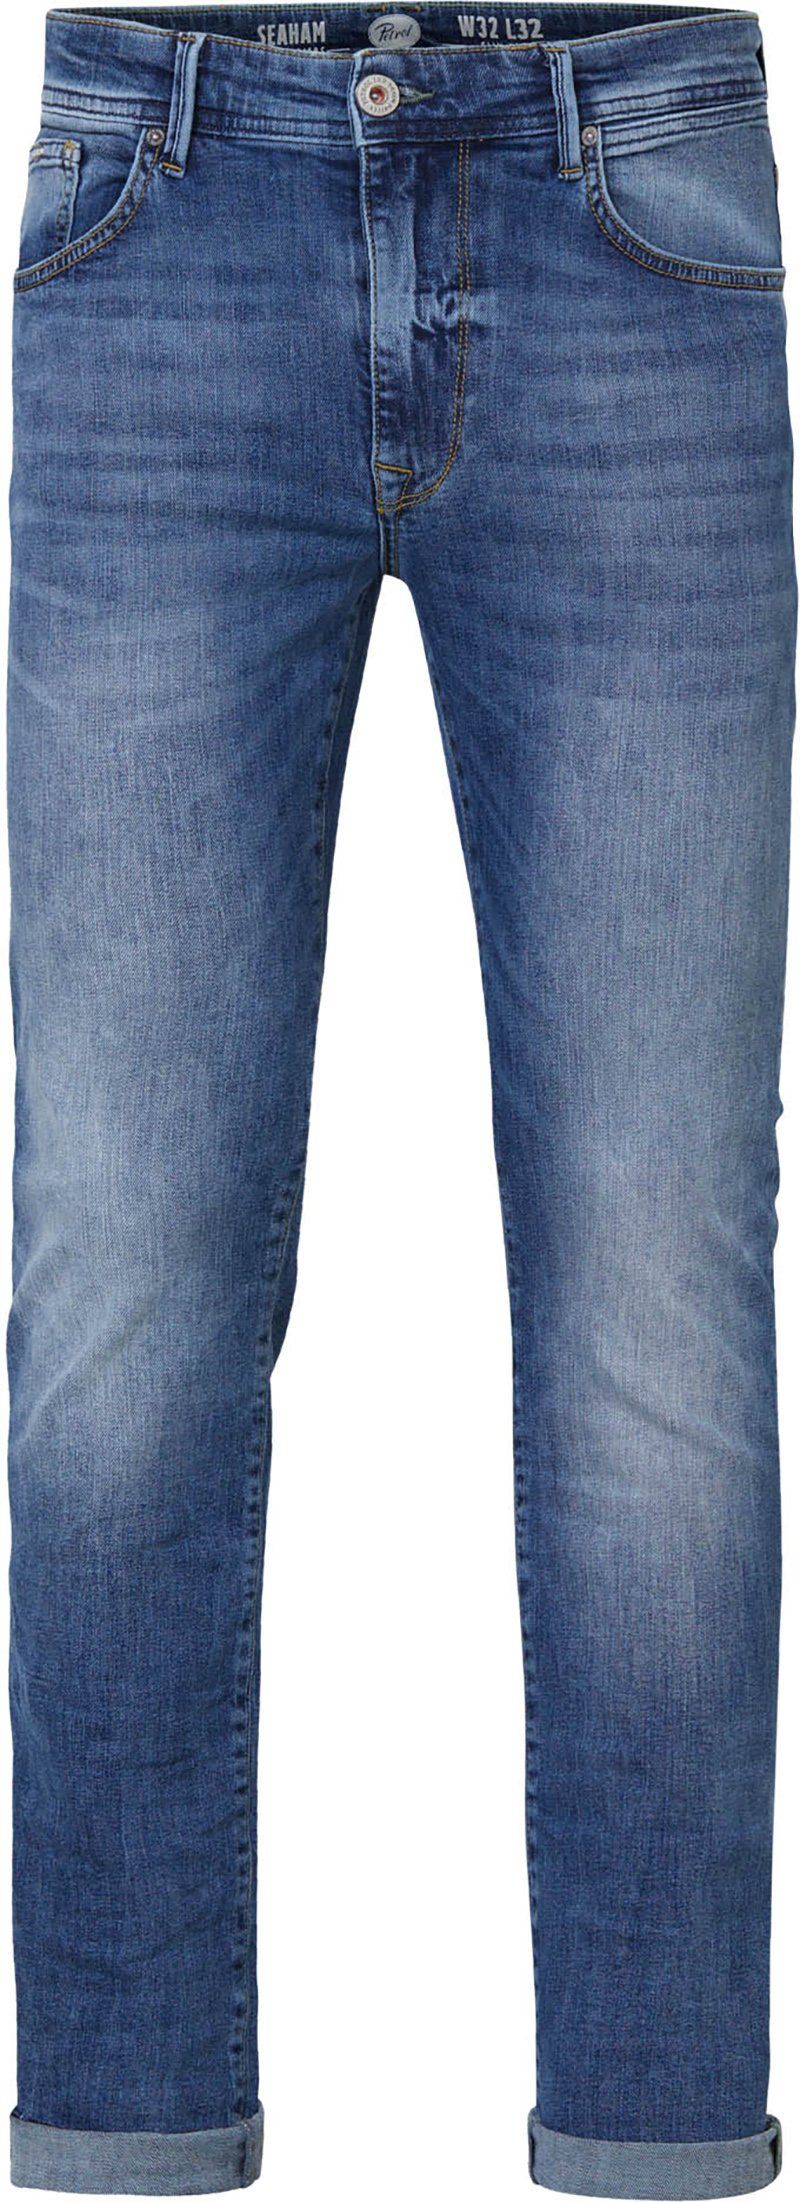 Petrol Seaham Jeans Indigo Blue - Größe W 34 - L 34 von Petrol